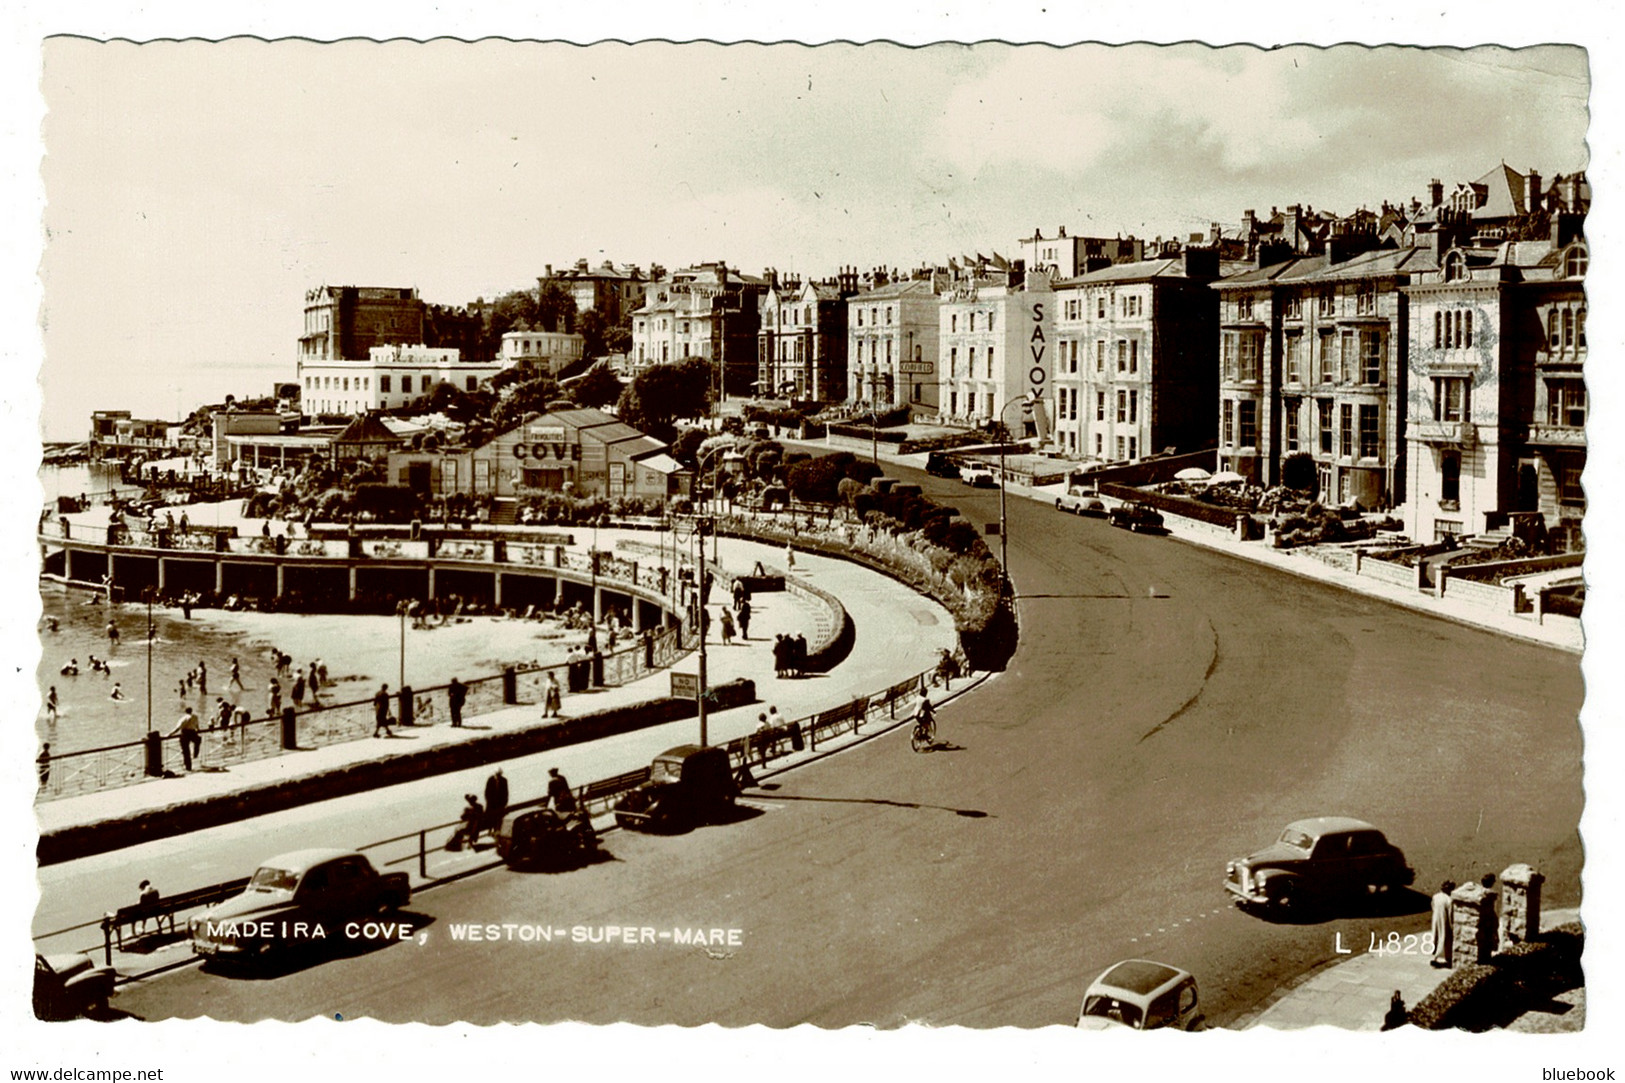 Ref  1505  -  1960's Real Photo Postcard - Madeira Cove Weston-Super-Mare Somerset - Weston-Super-Mare